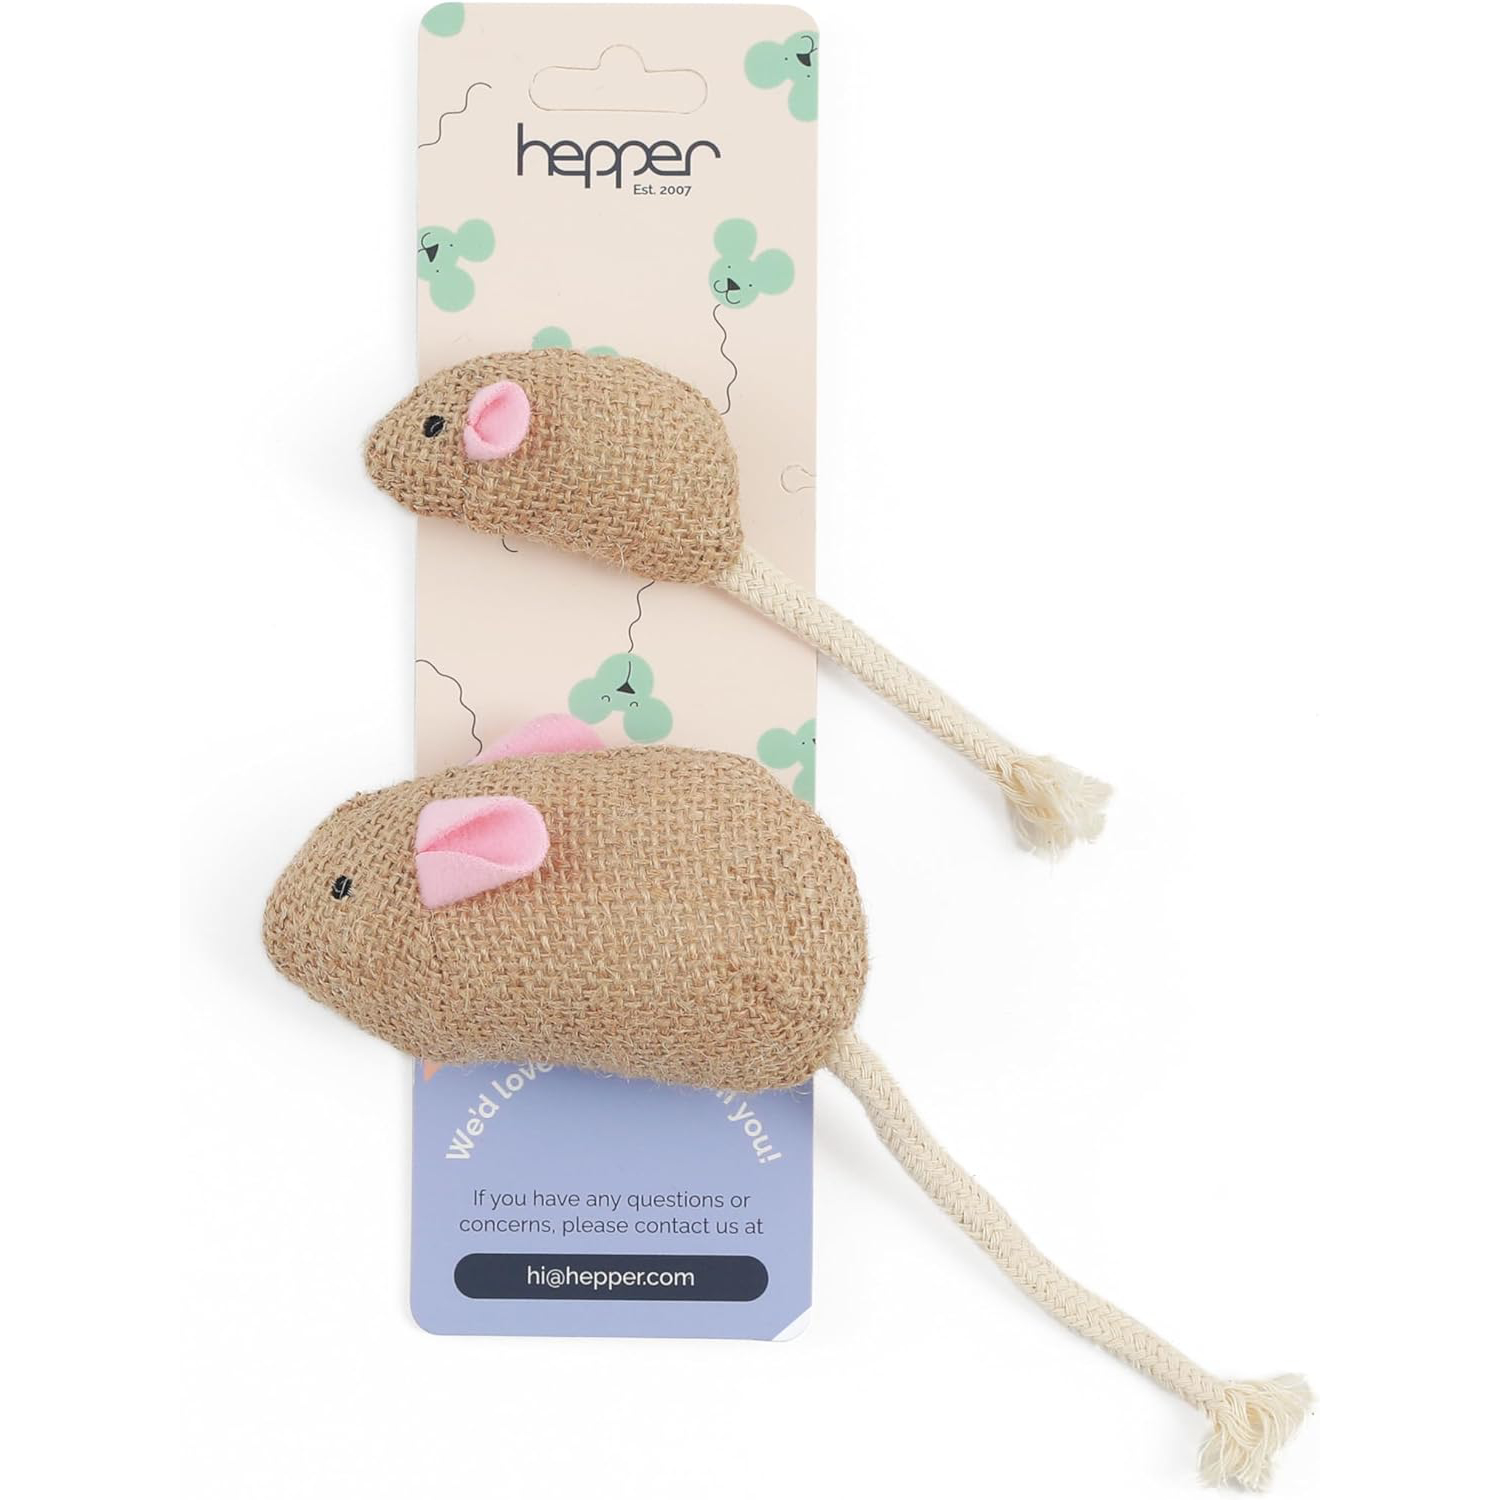 Hepper Catnip Mice Toy Set